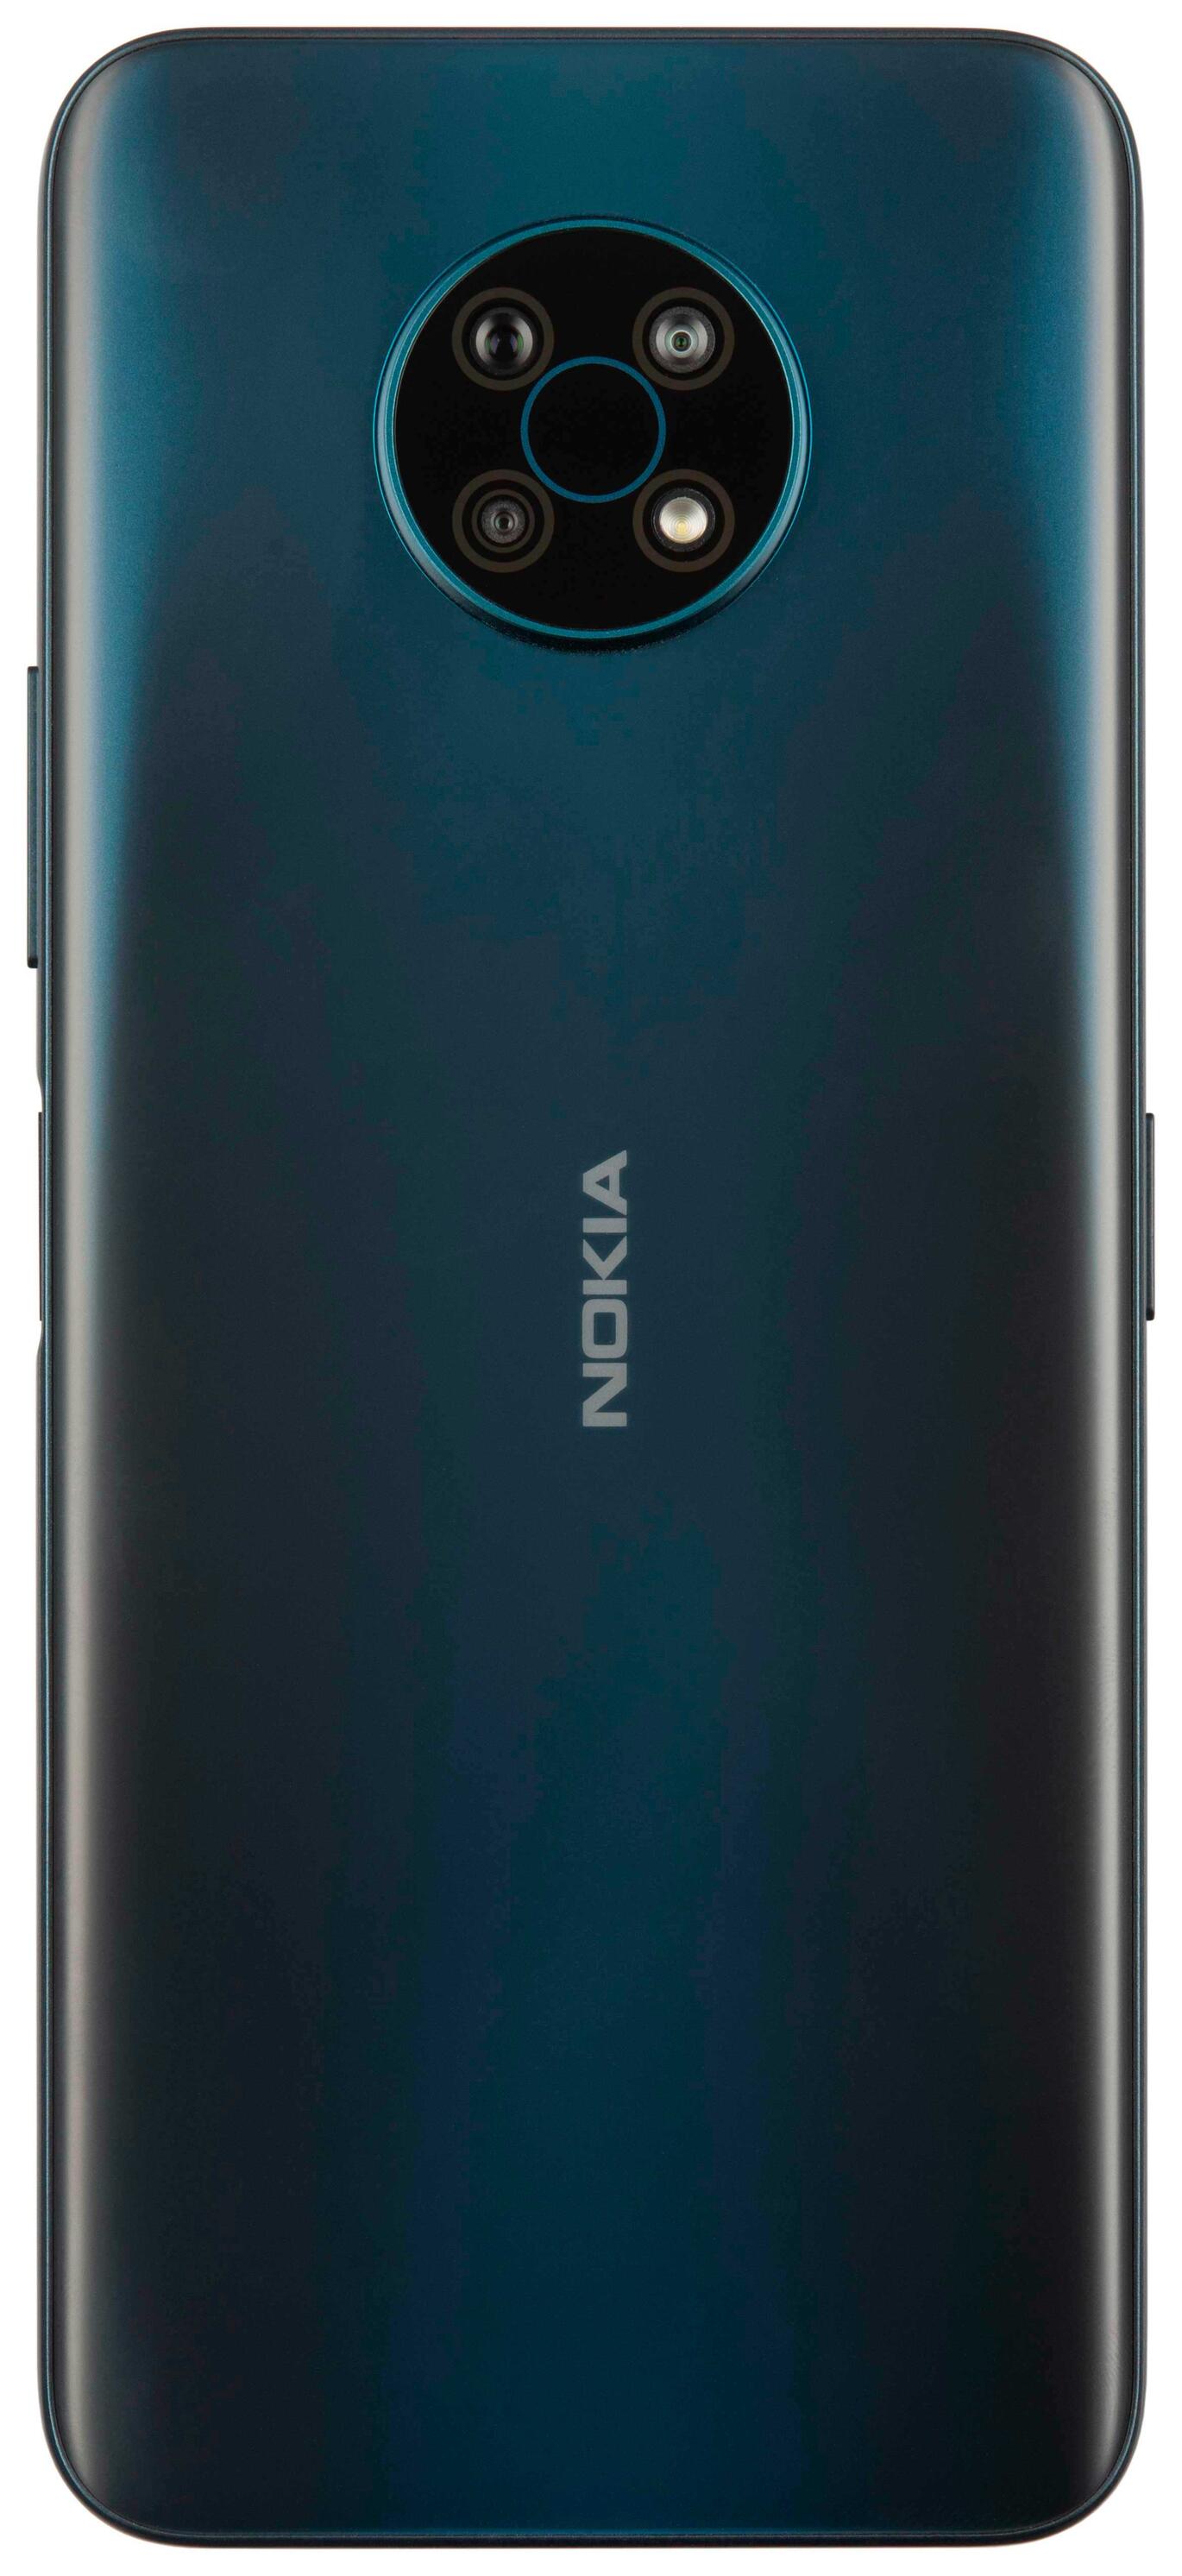 G50 (128GB) Nokia